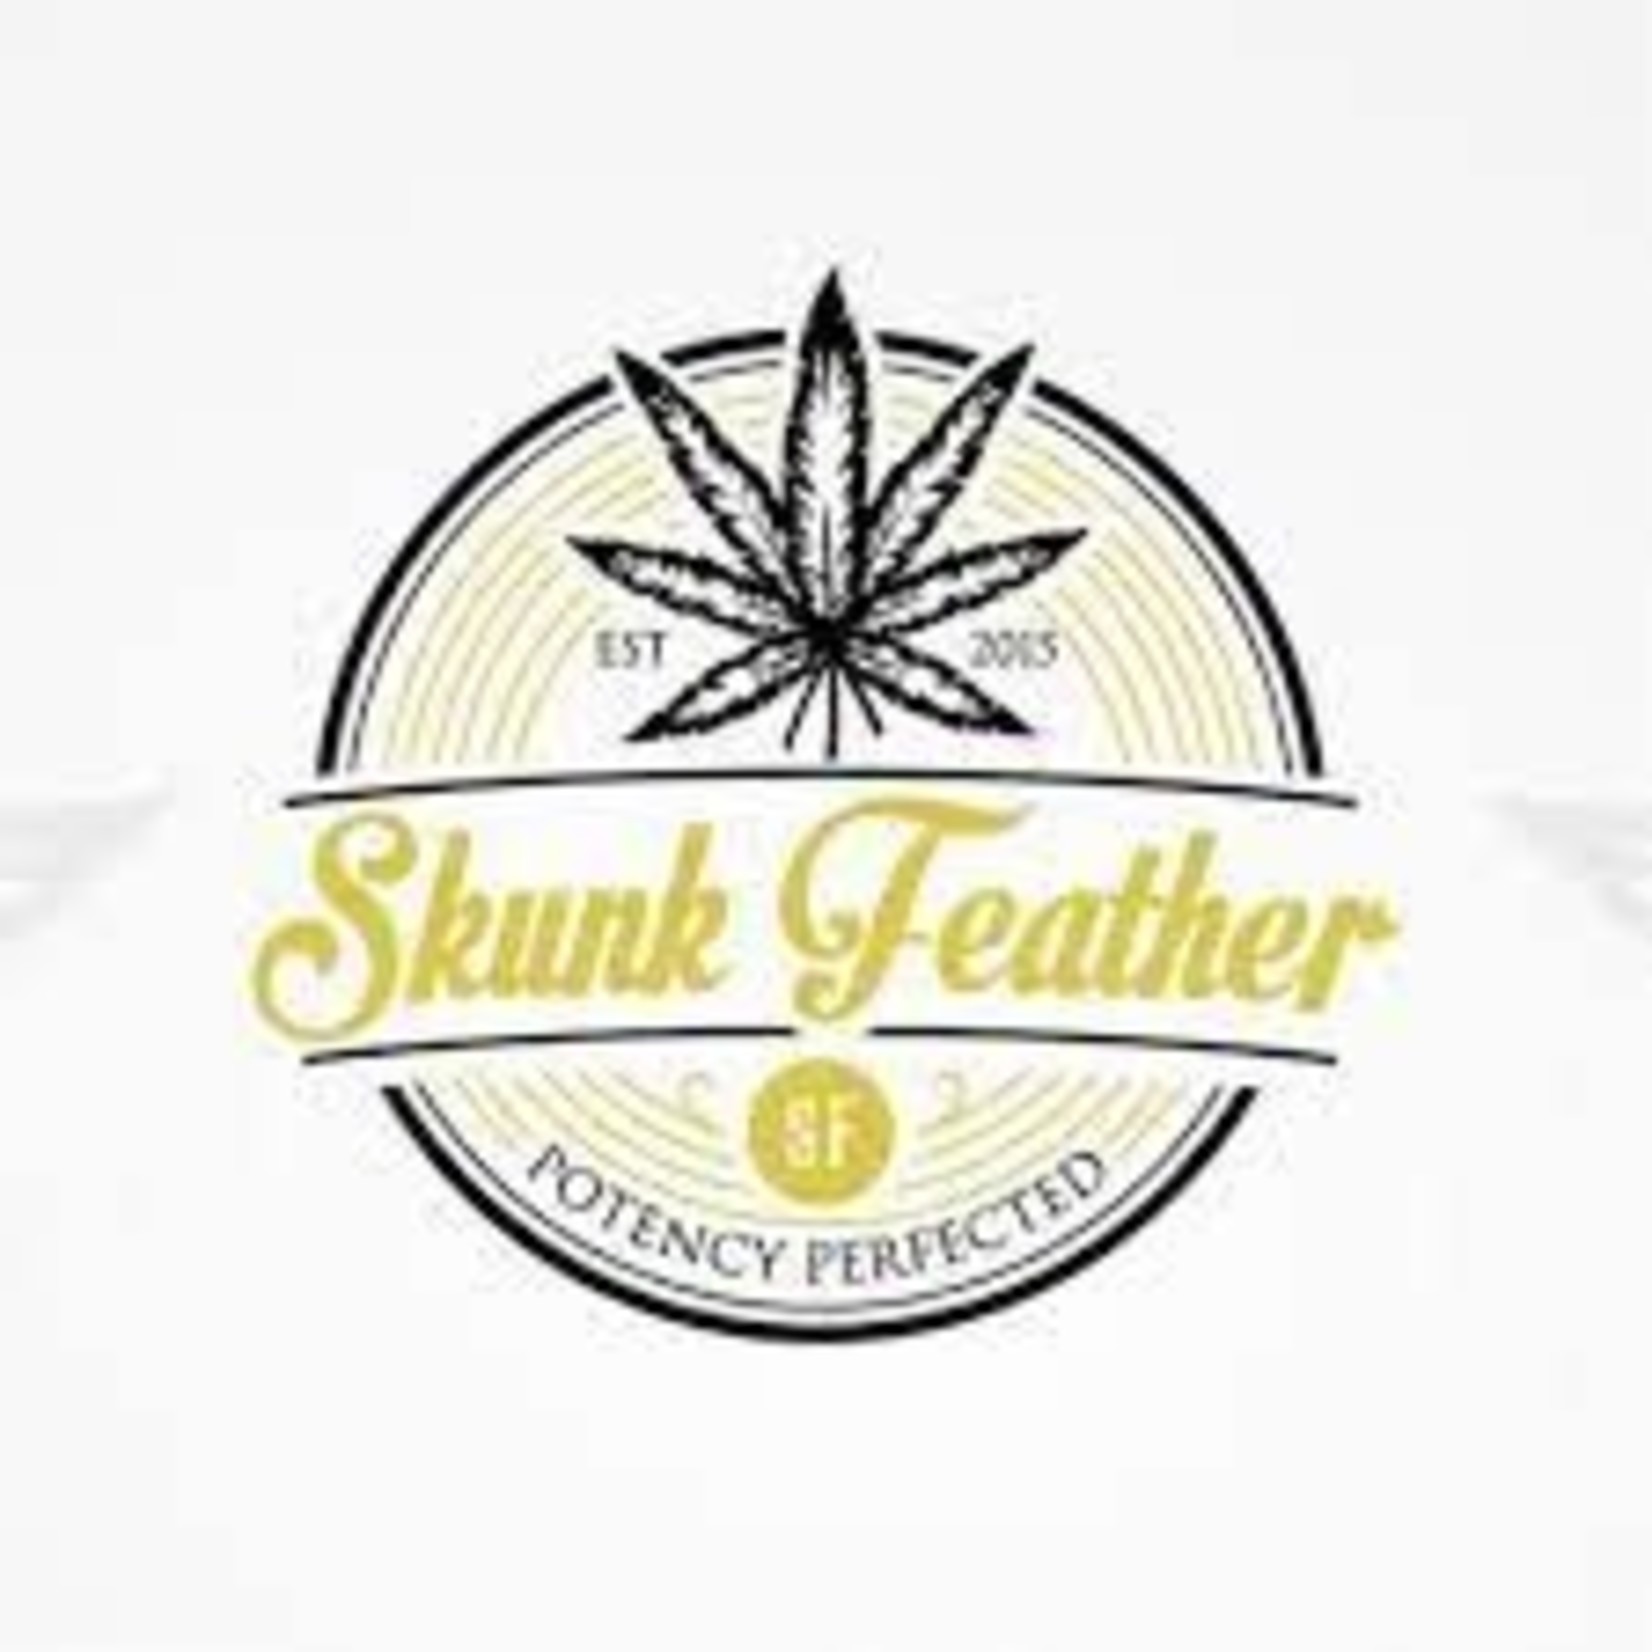 Skunk Feather / Grapes & Cream